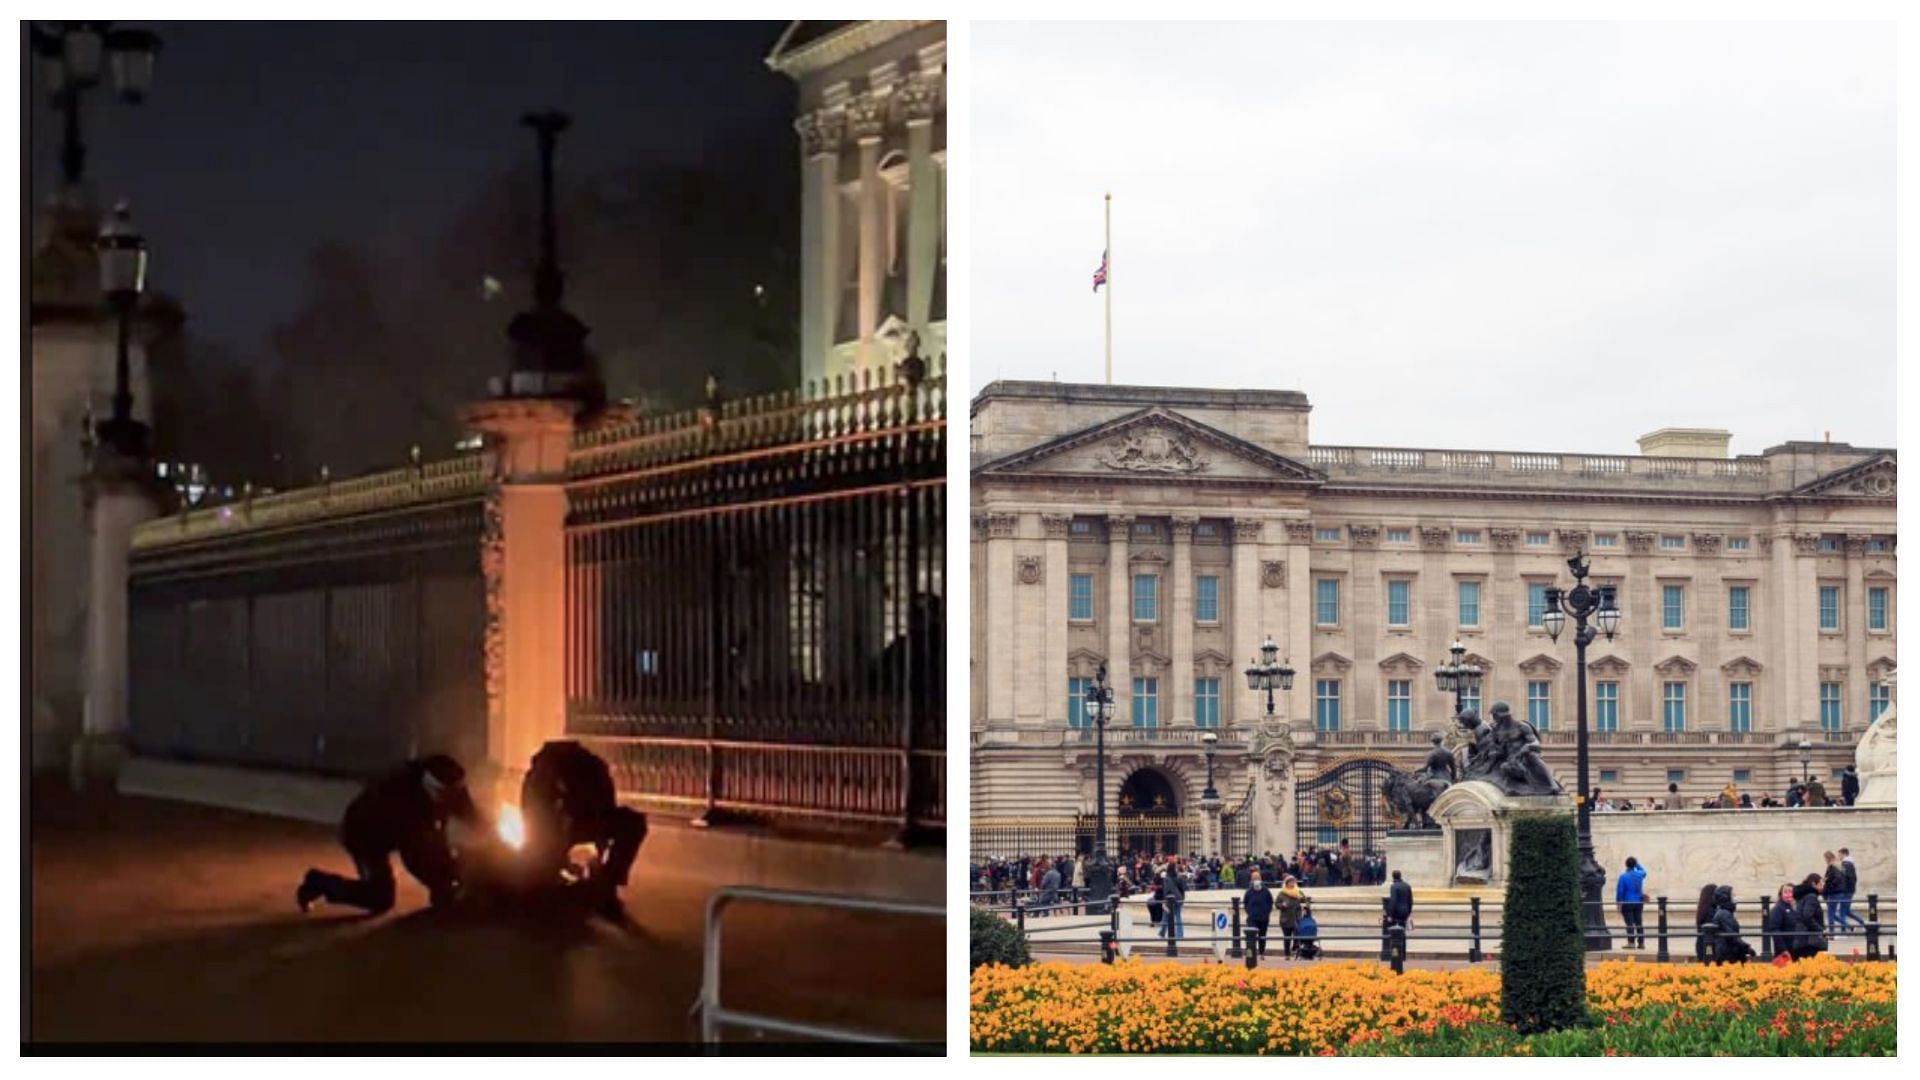 (images via Buckingham Palace Guard/Istock)